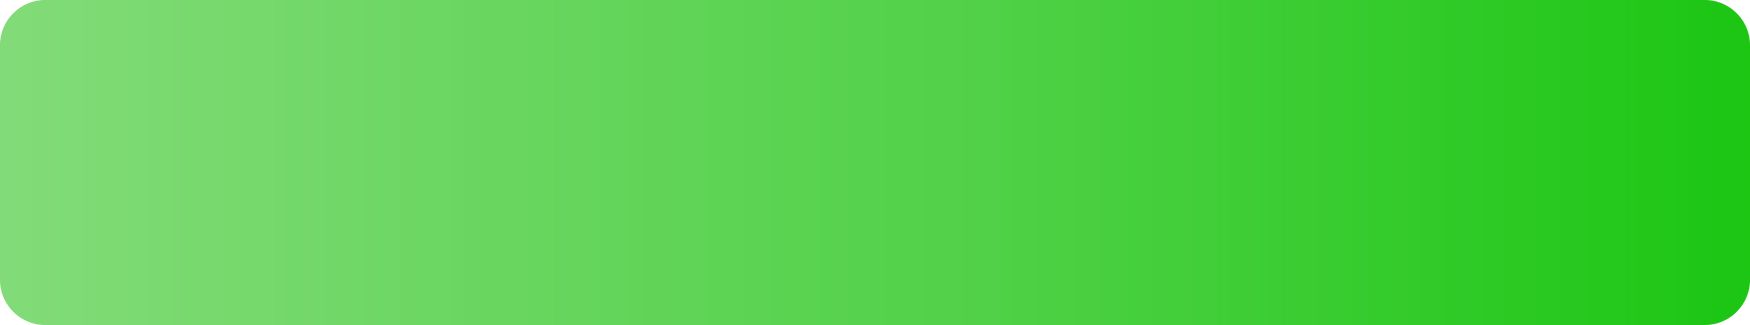 Button gradient modern green